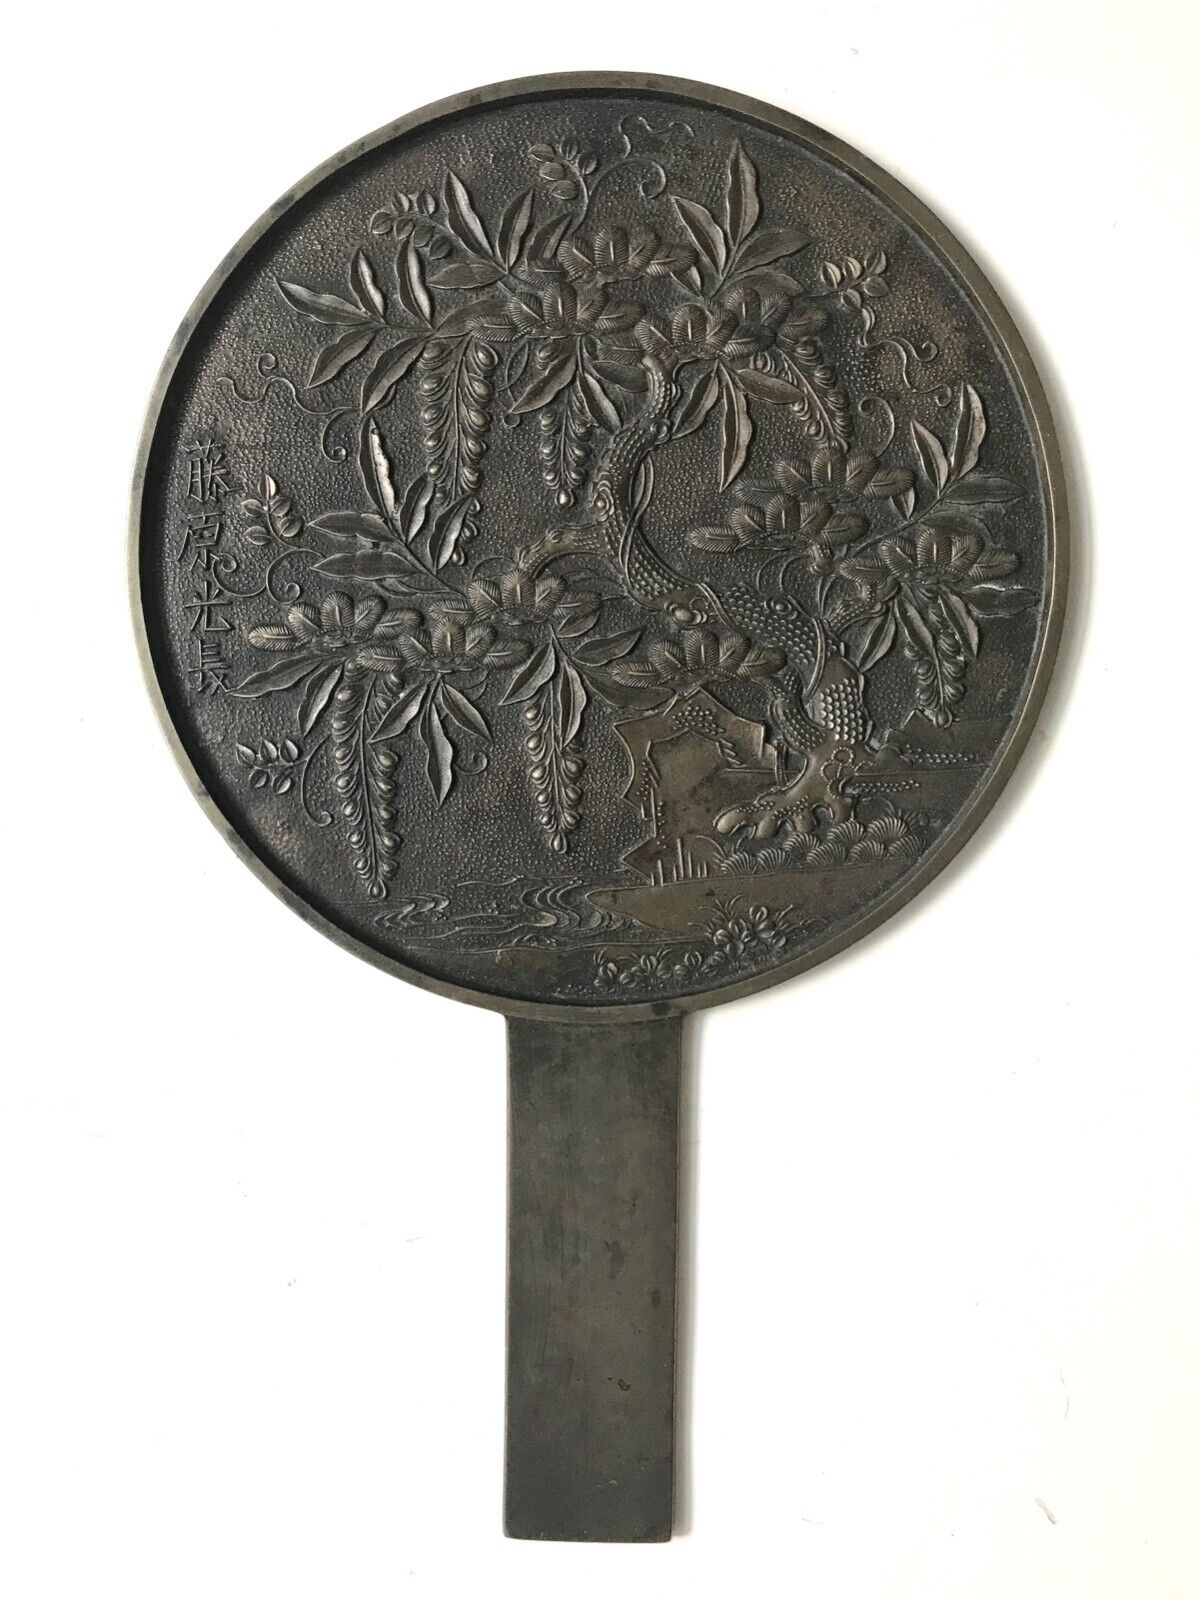 AMAZING Antique Meiji Japanese bronze mirror with calligraphy 藤原广长